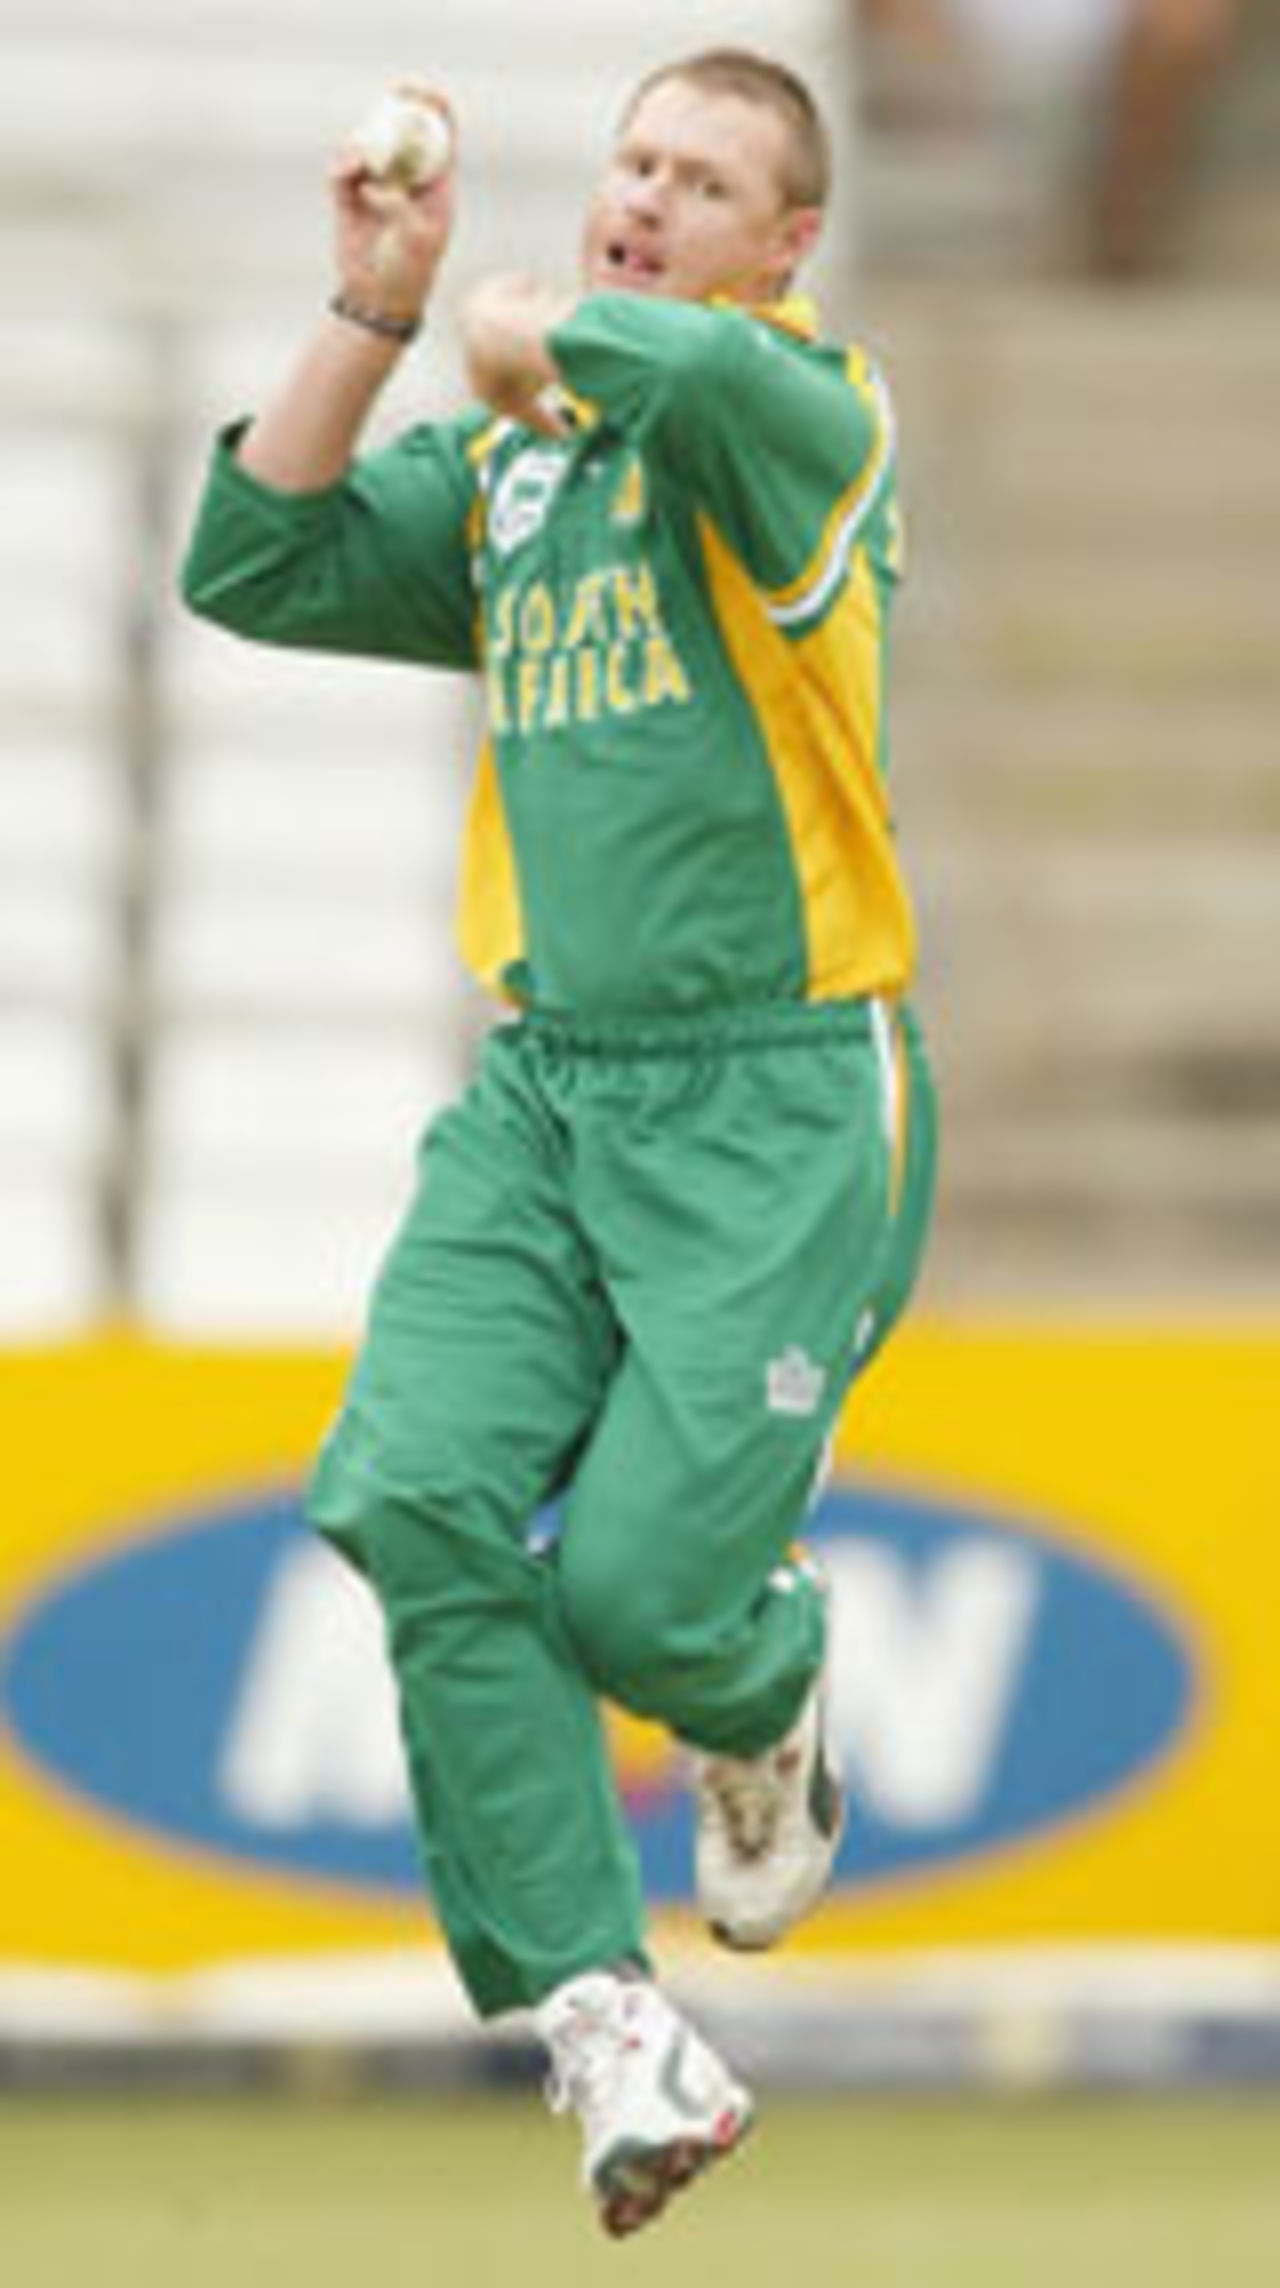 Lance Klusener bowling, South Africa v West Indies, 3rd ODI, Durban, January 30, 2004